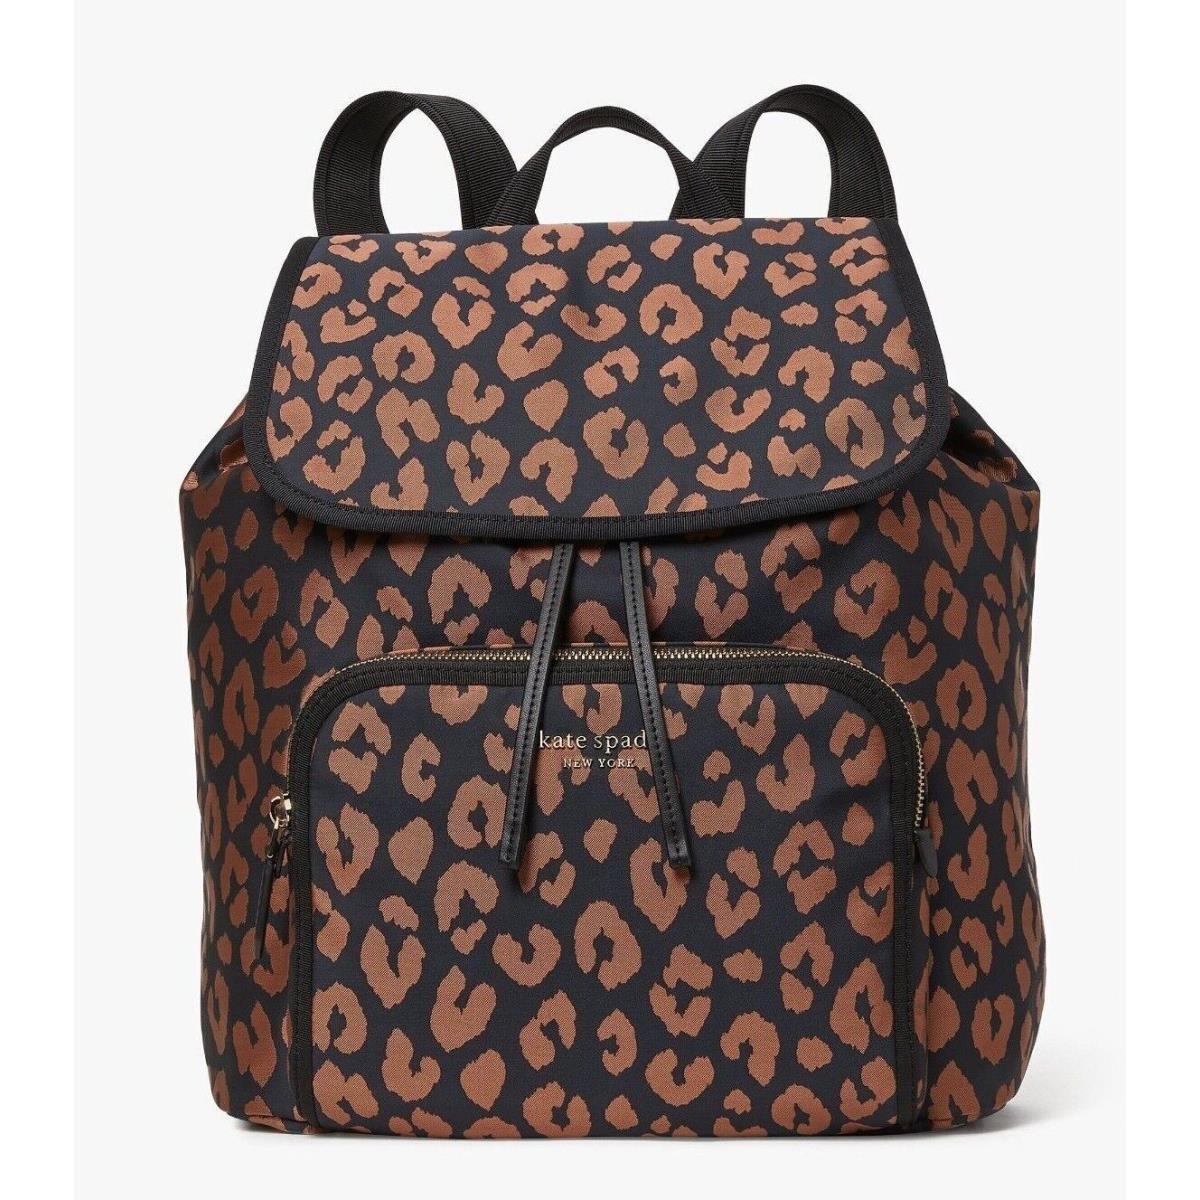 Kate Spade Sam Leopard Nylon MD Backpack K4463 Cheetah Leopardo Gift Bag FS